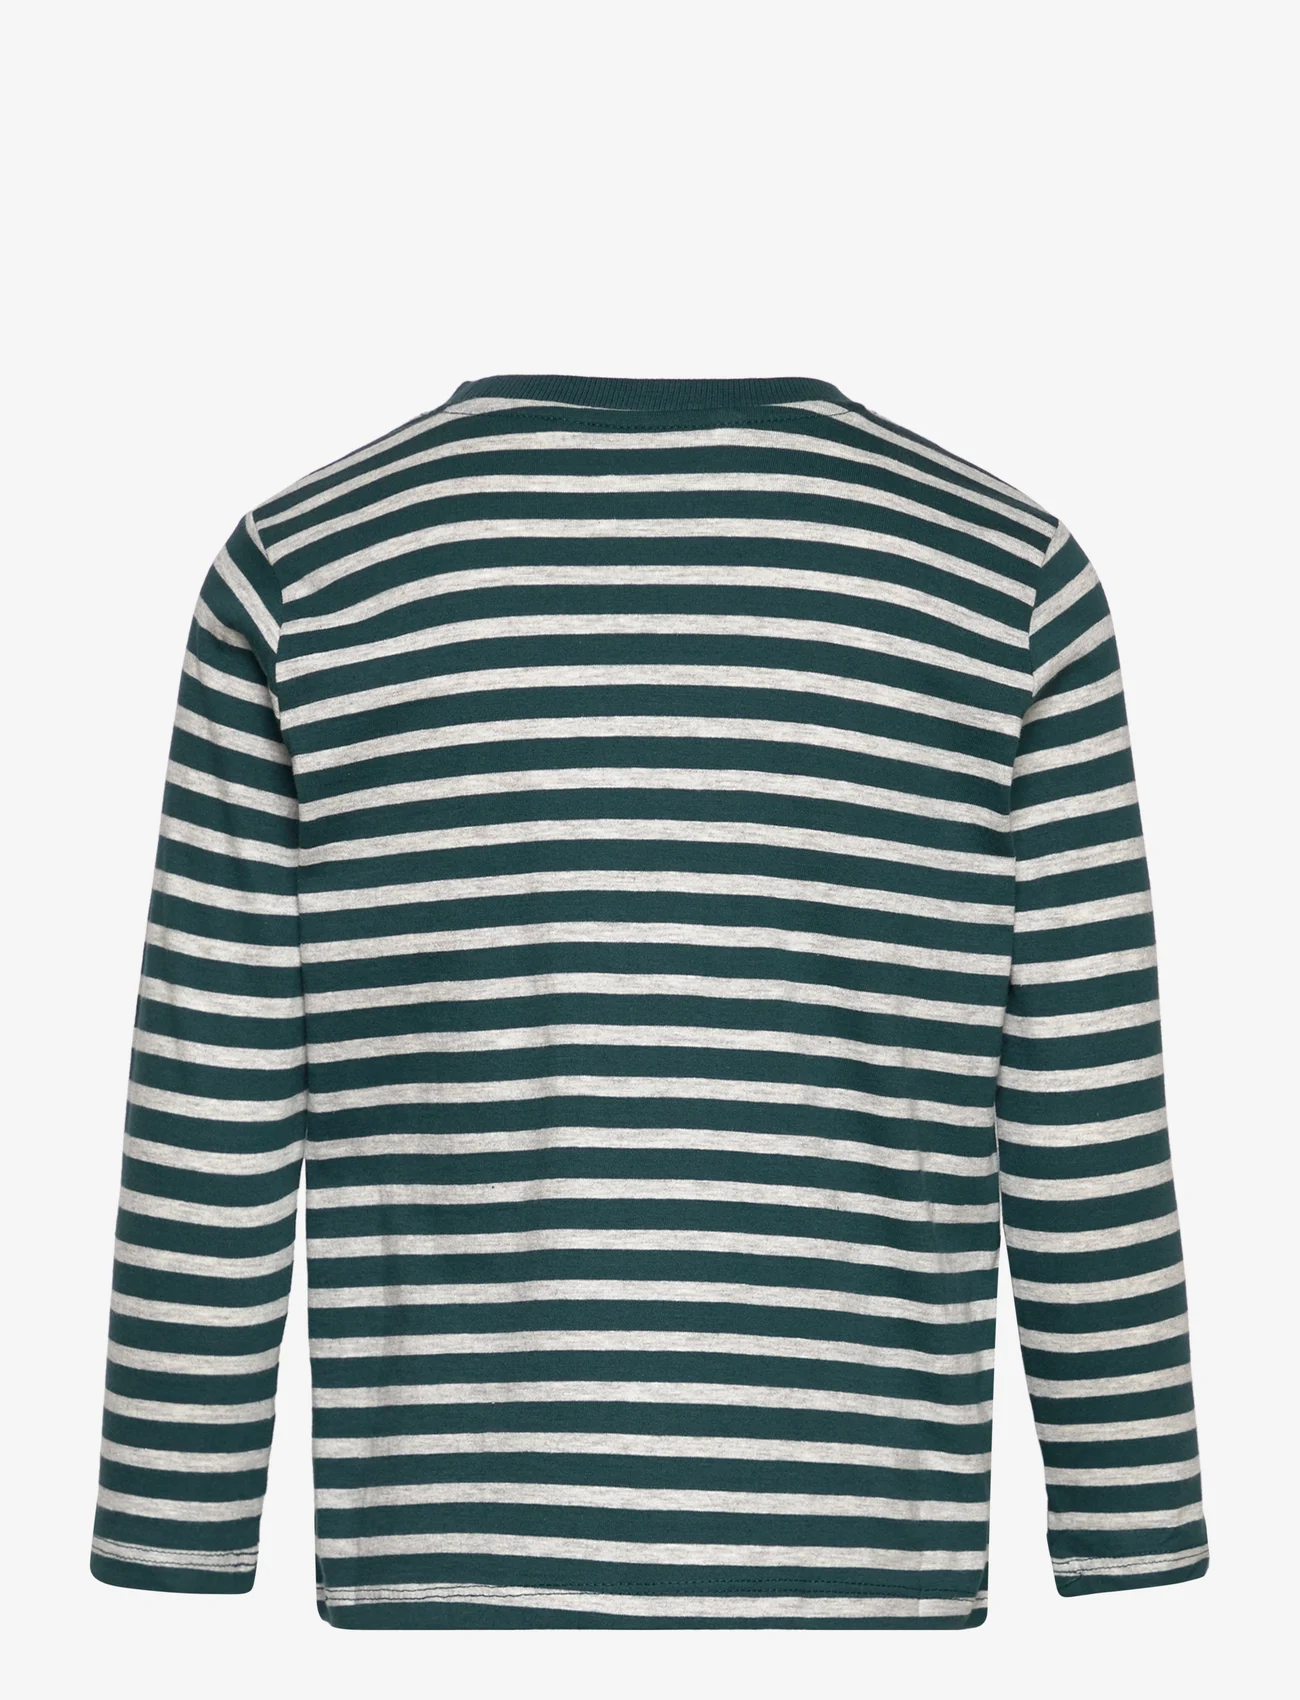 Mango - Striped long sleeves t-shirt - langærmede t-shirts - dark green - 1